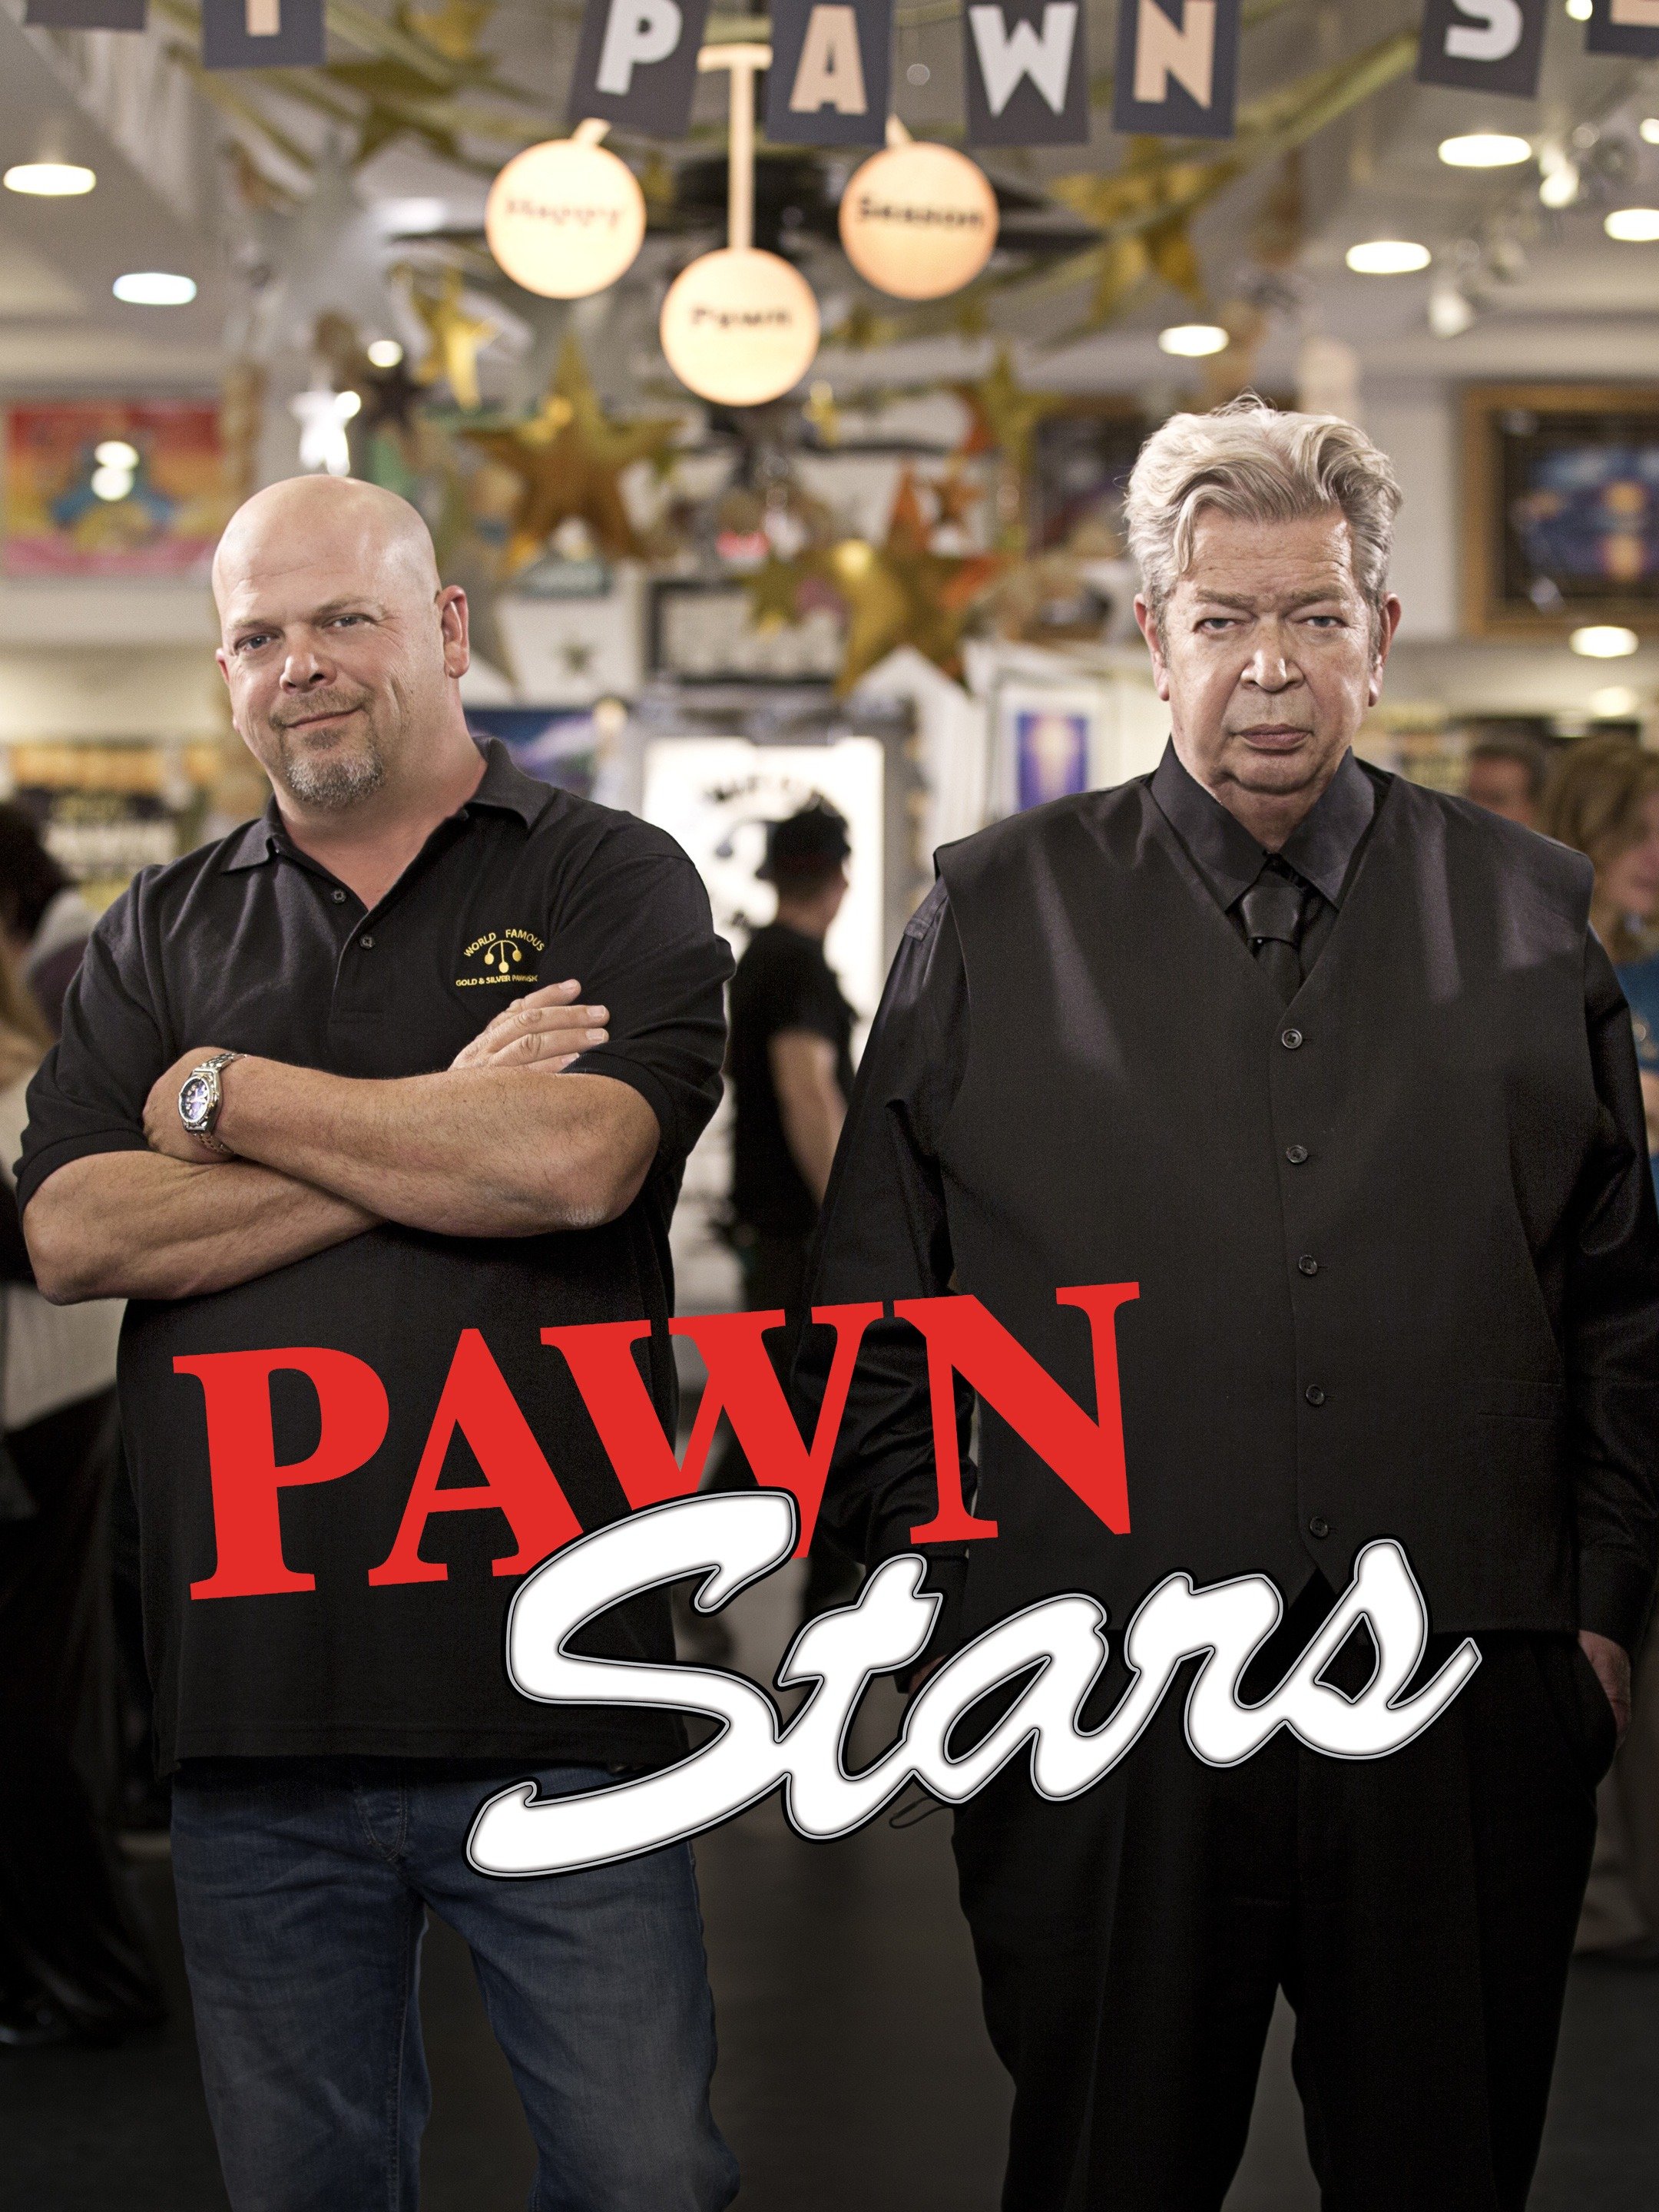 Pawn Stars Rotten Tomatoes